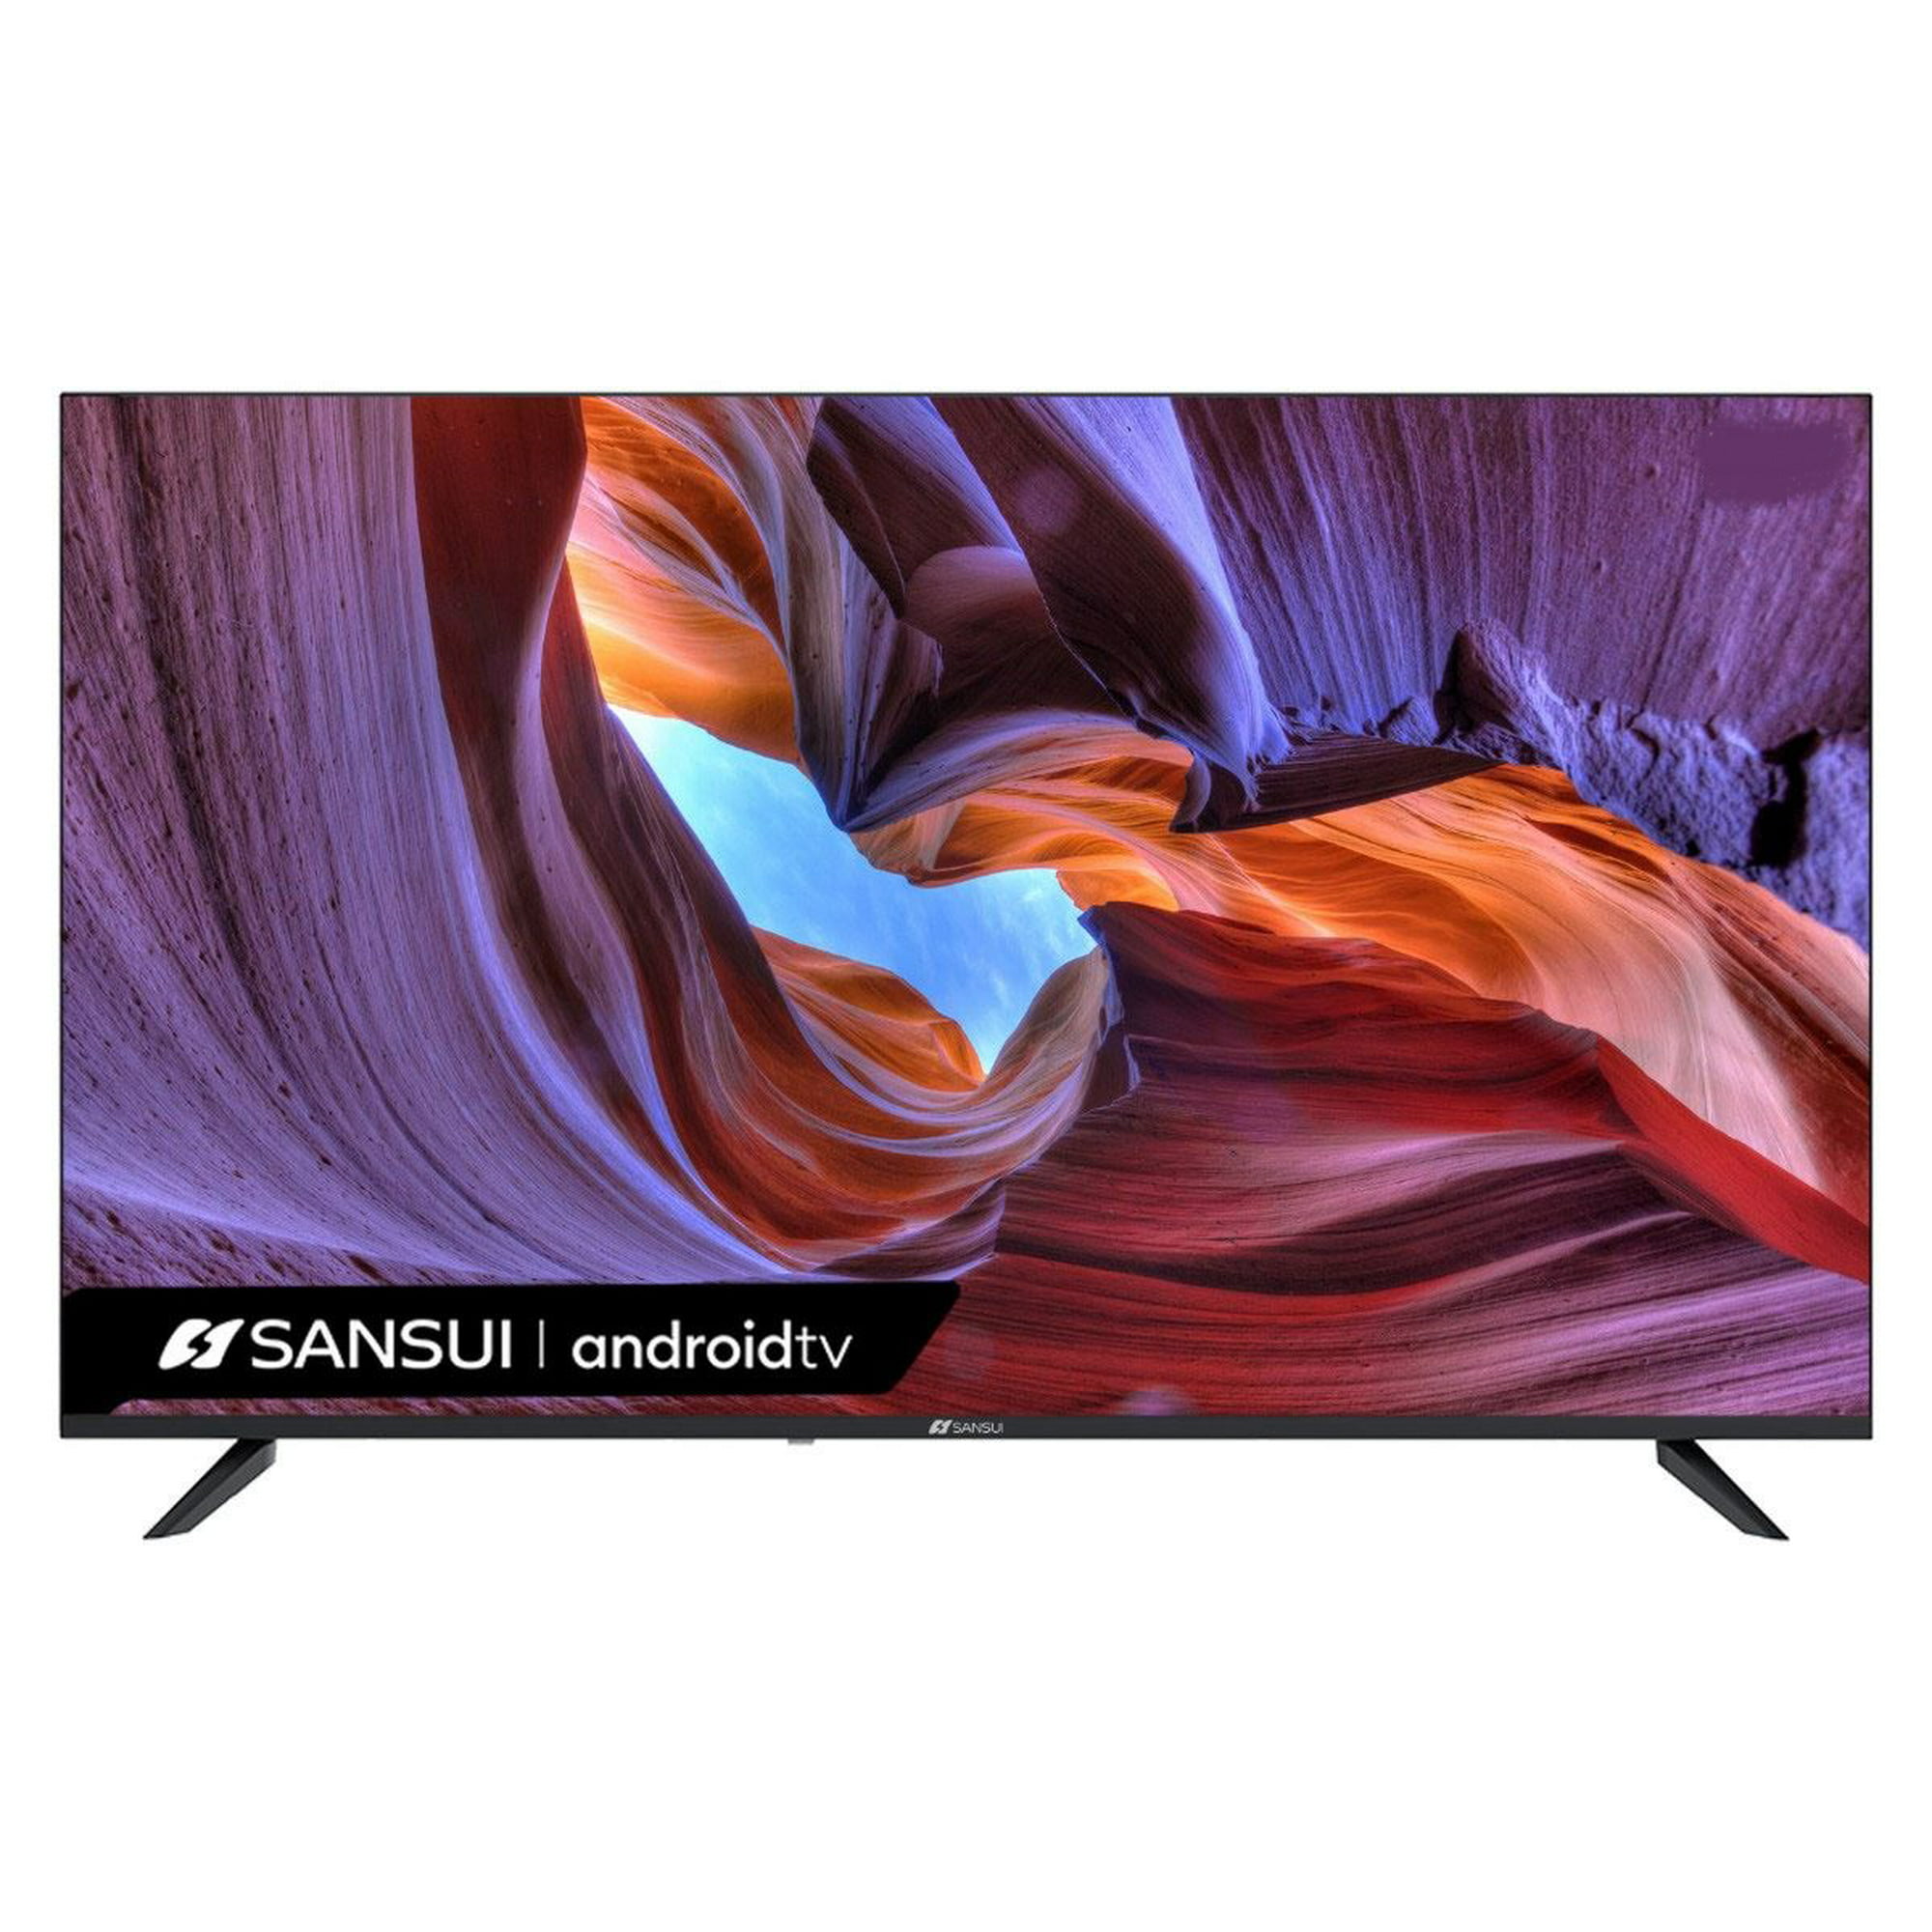 Pantalla Sansui 50 Pulgadas Smart TV UHD 4K Android TV SMX50V1UA